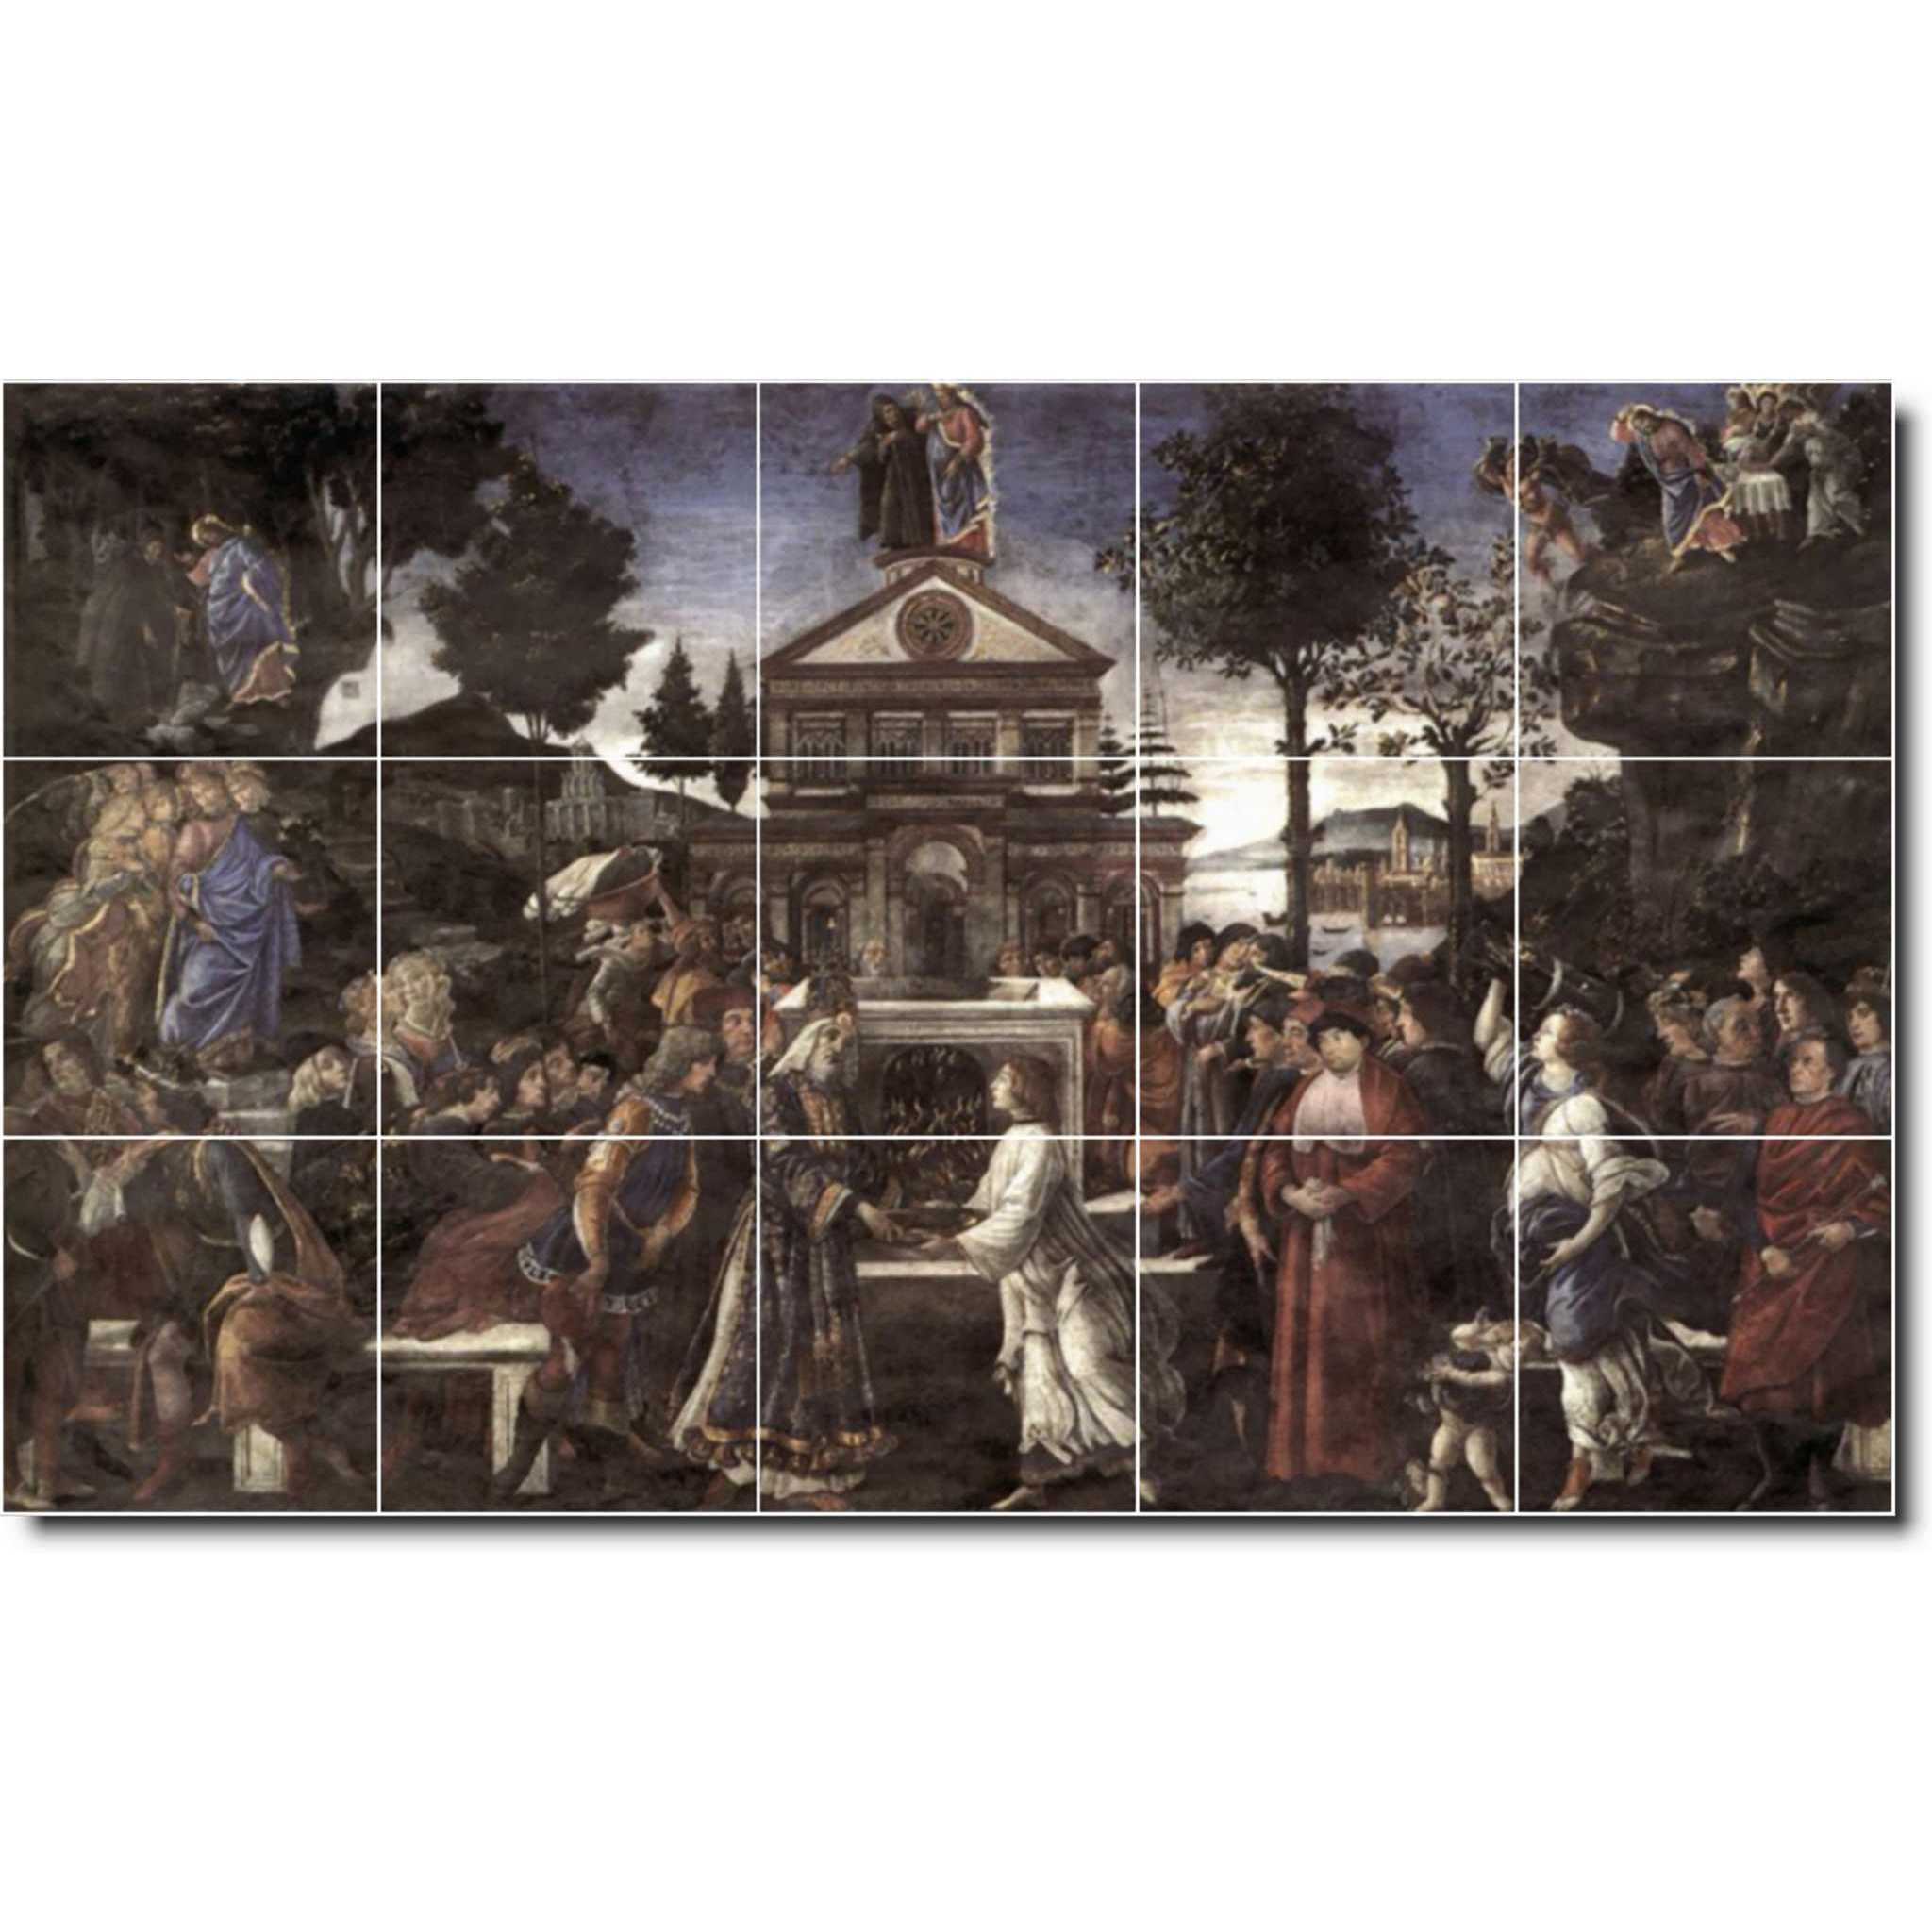 sandro botticelli religious painting ceramic tile mural p00718